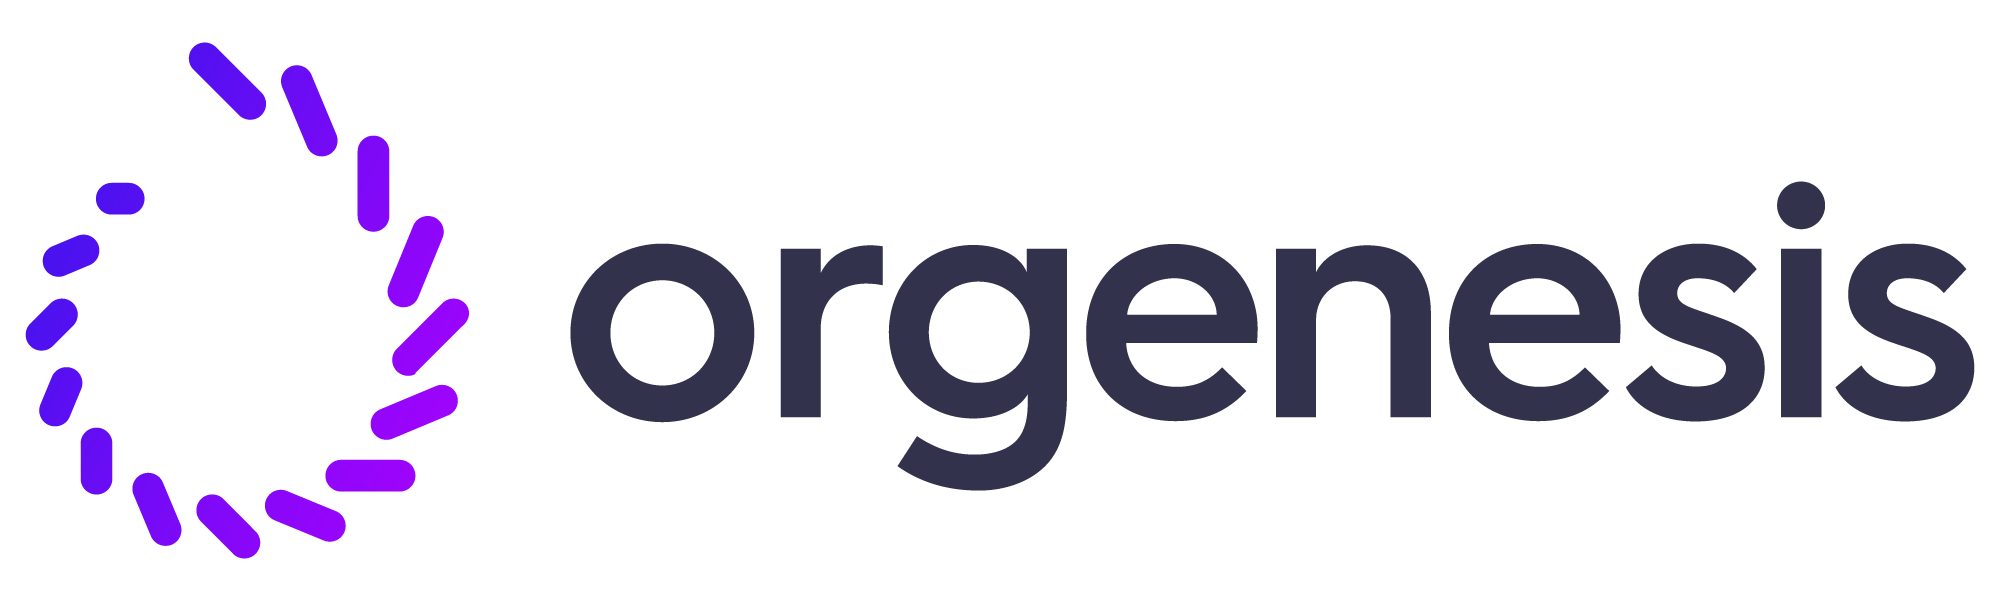 orgenesis-dark-logo